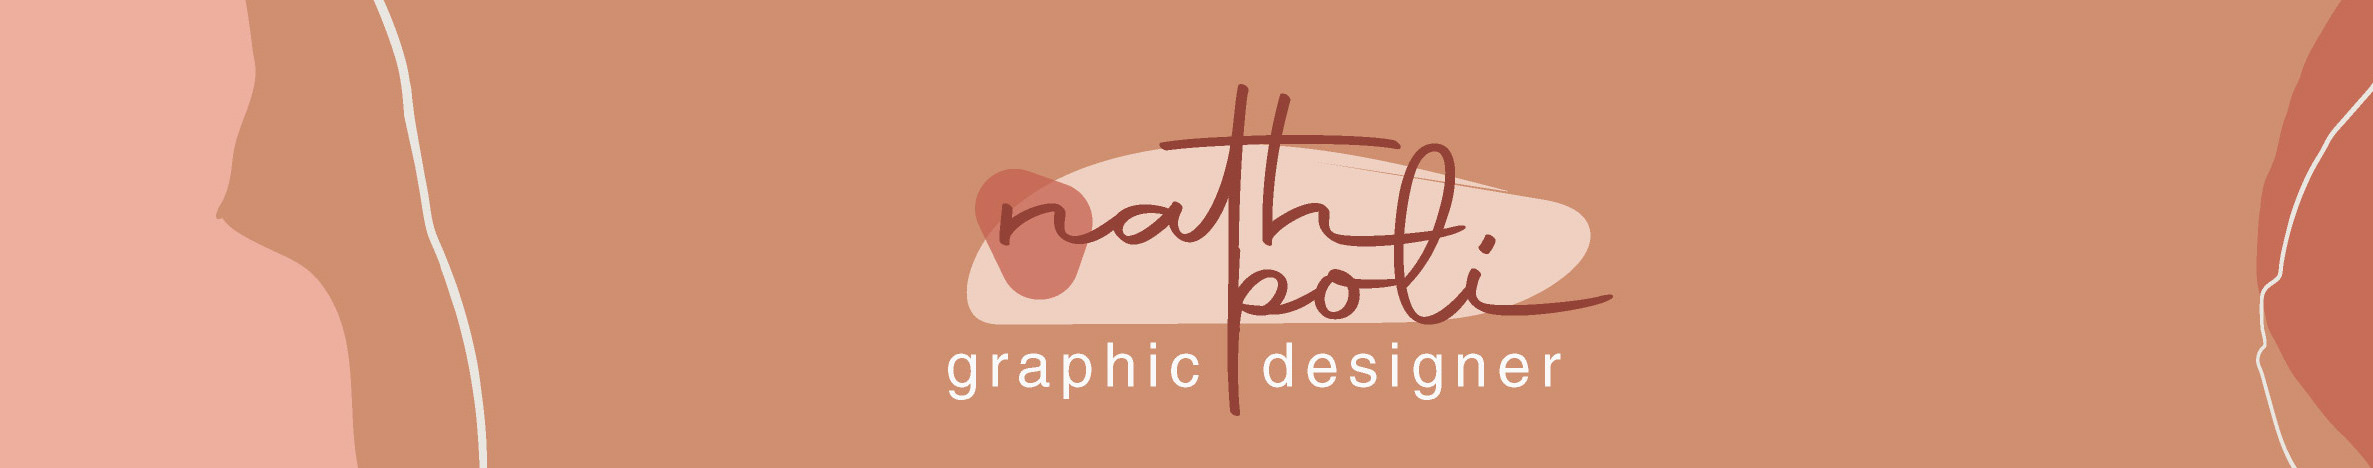 Nathália Policarpo's profile banner